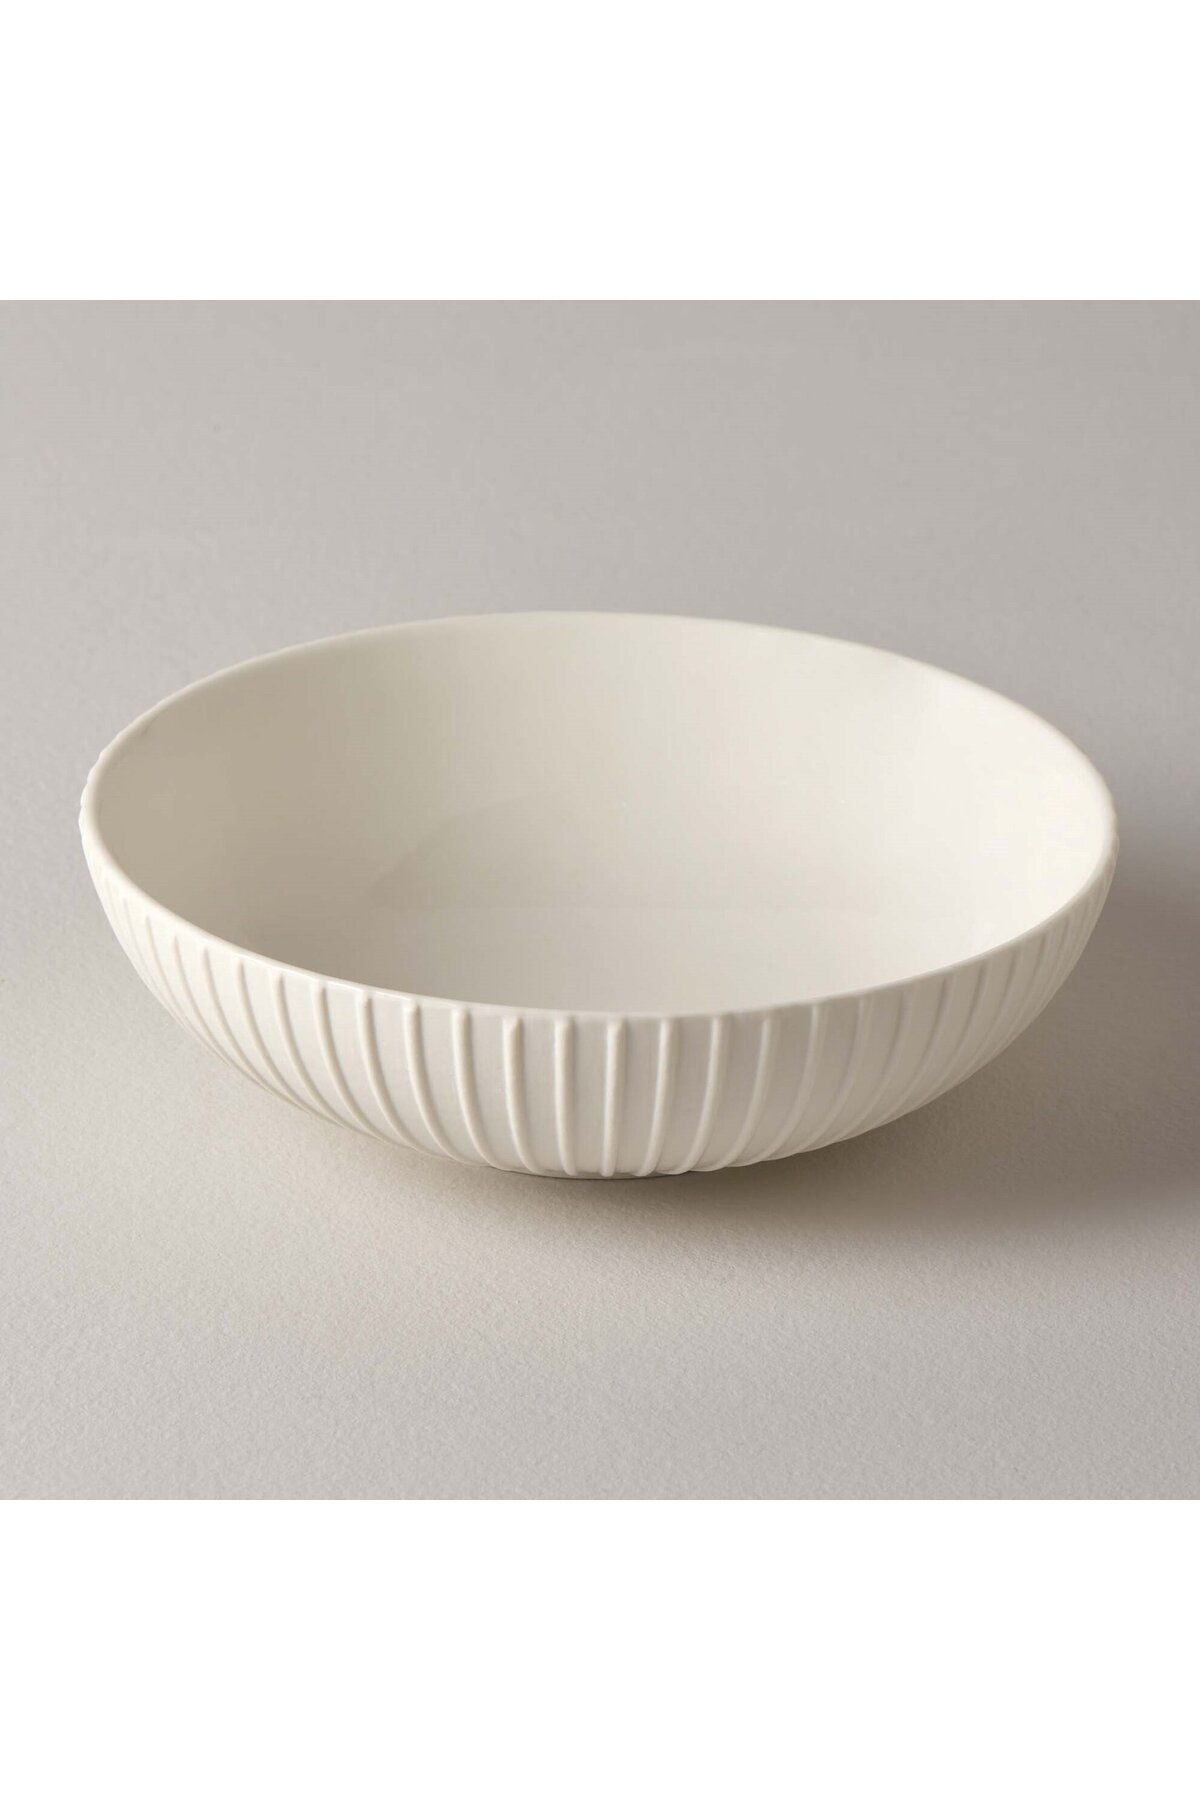 Linens Trend Porselen 18 Cm Kase Beyaz